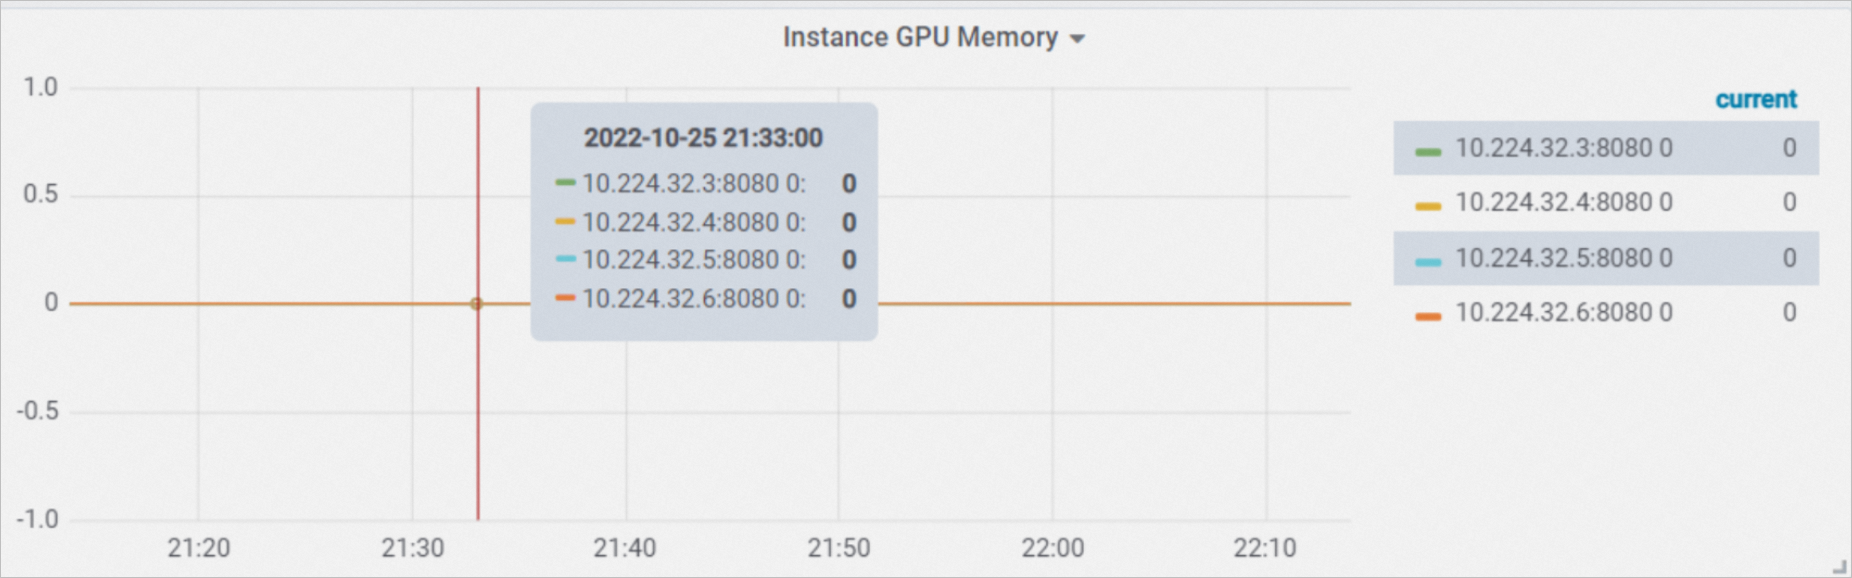 Instance GPU Memory